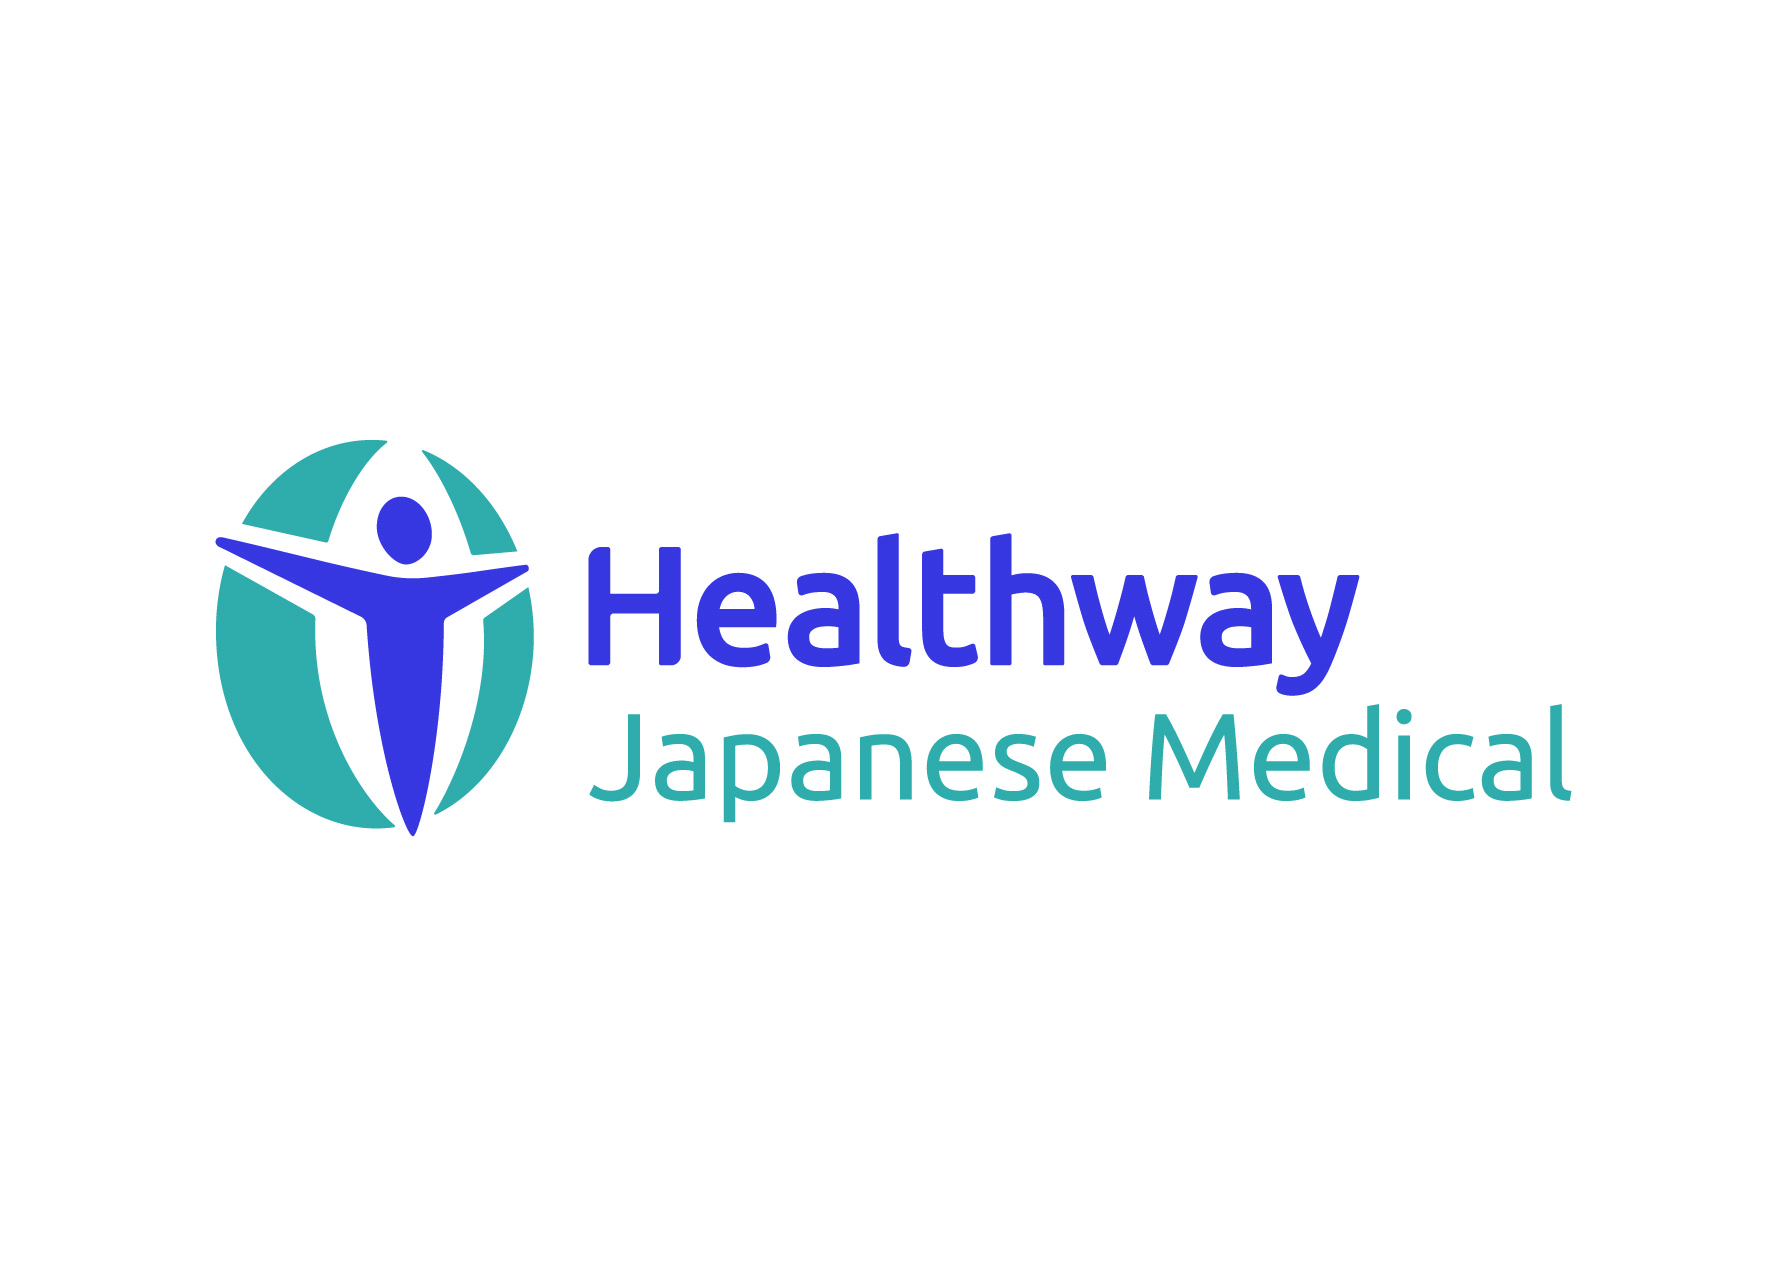 Healthway Japanese Medical